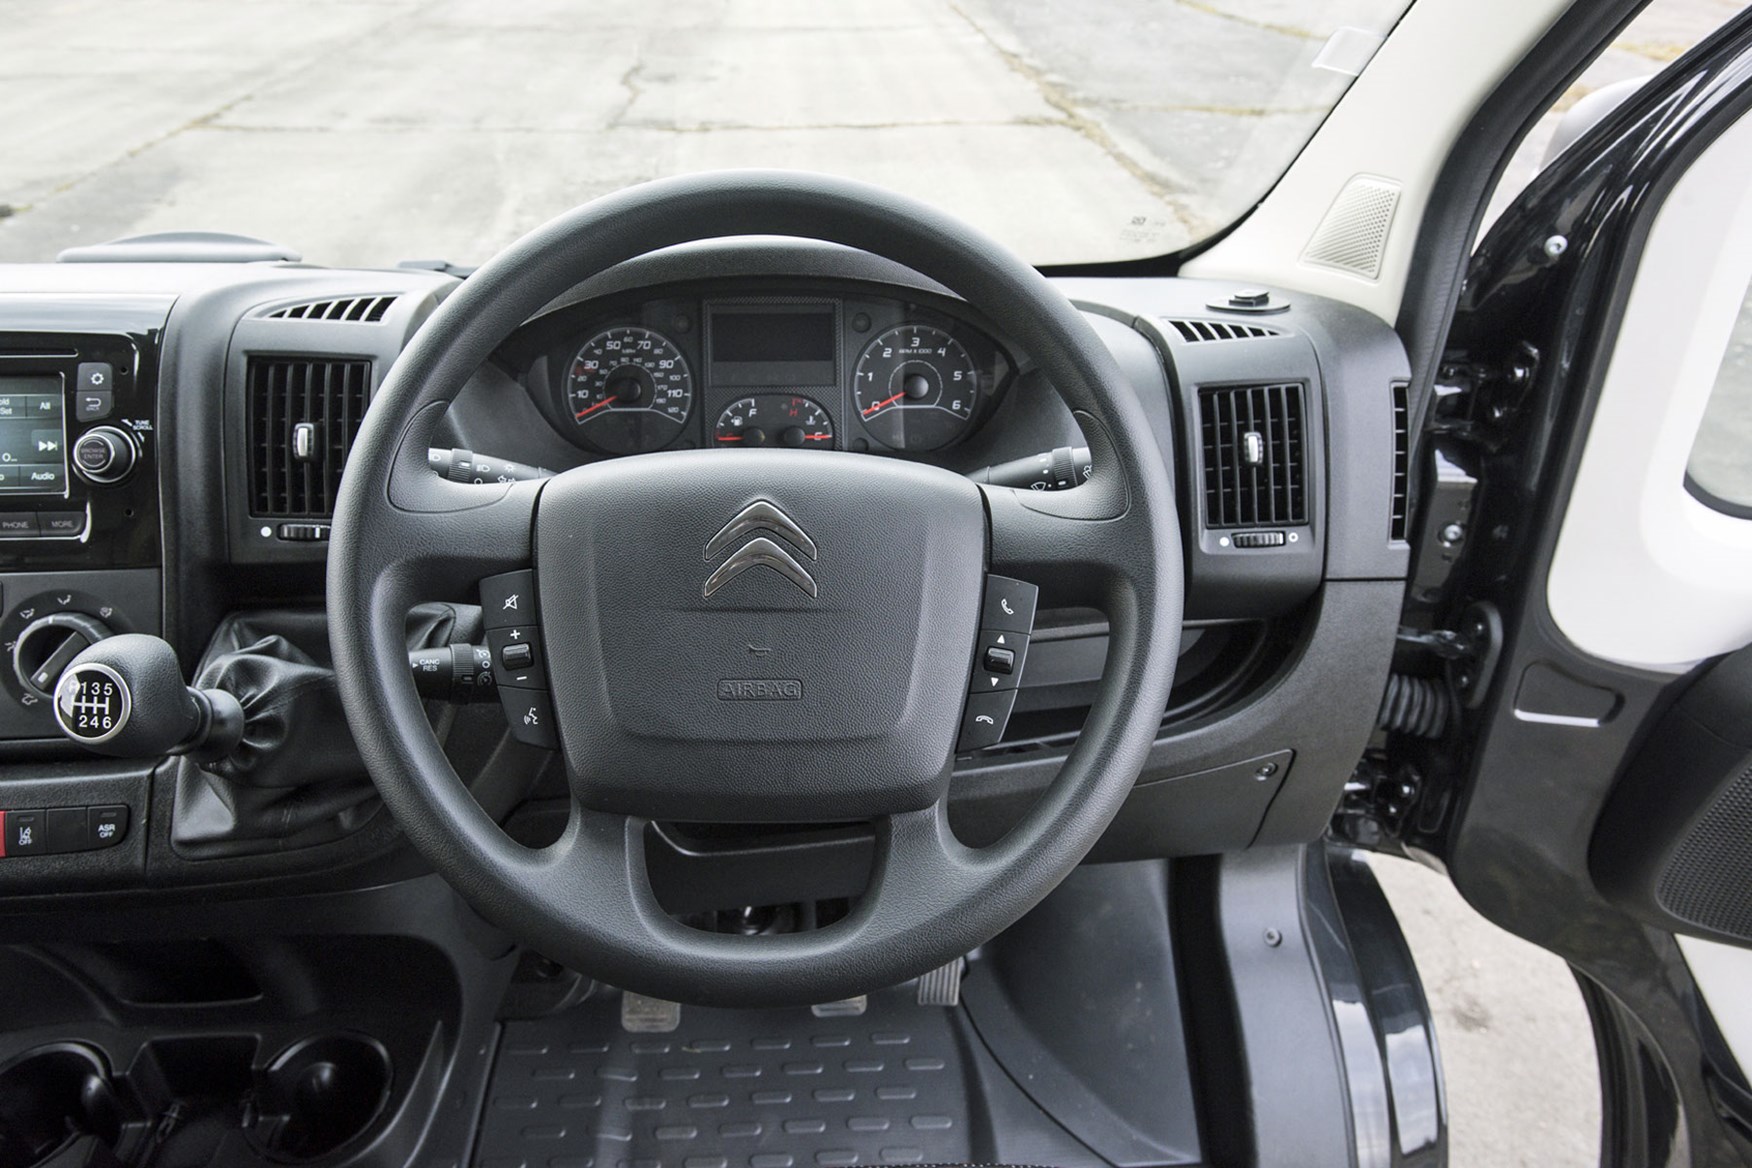 Citroen Relay review - cab interior, steering wheel